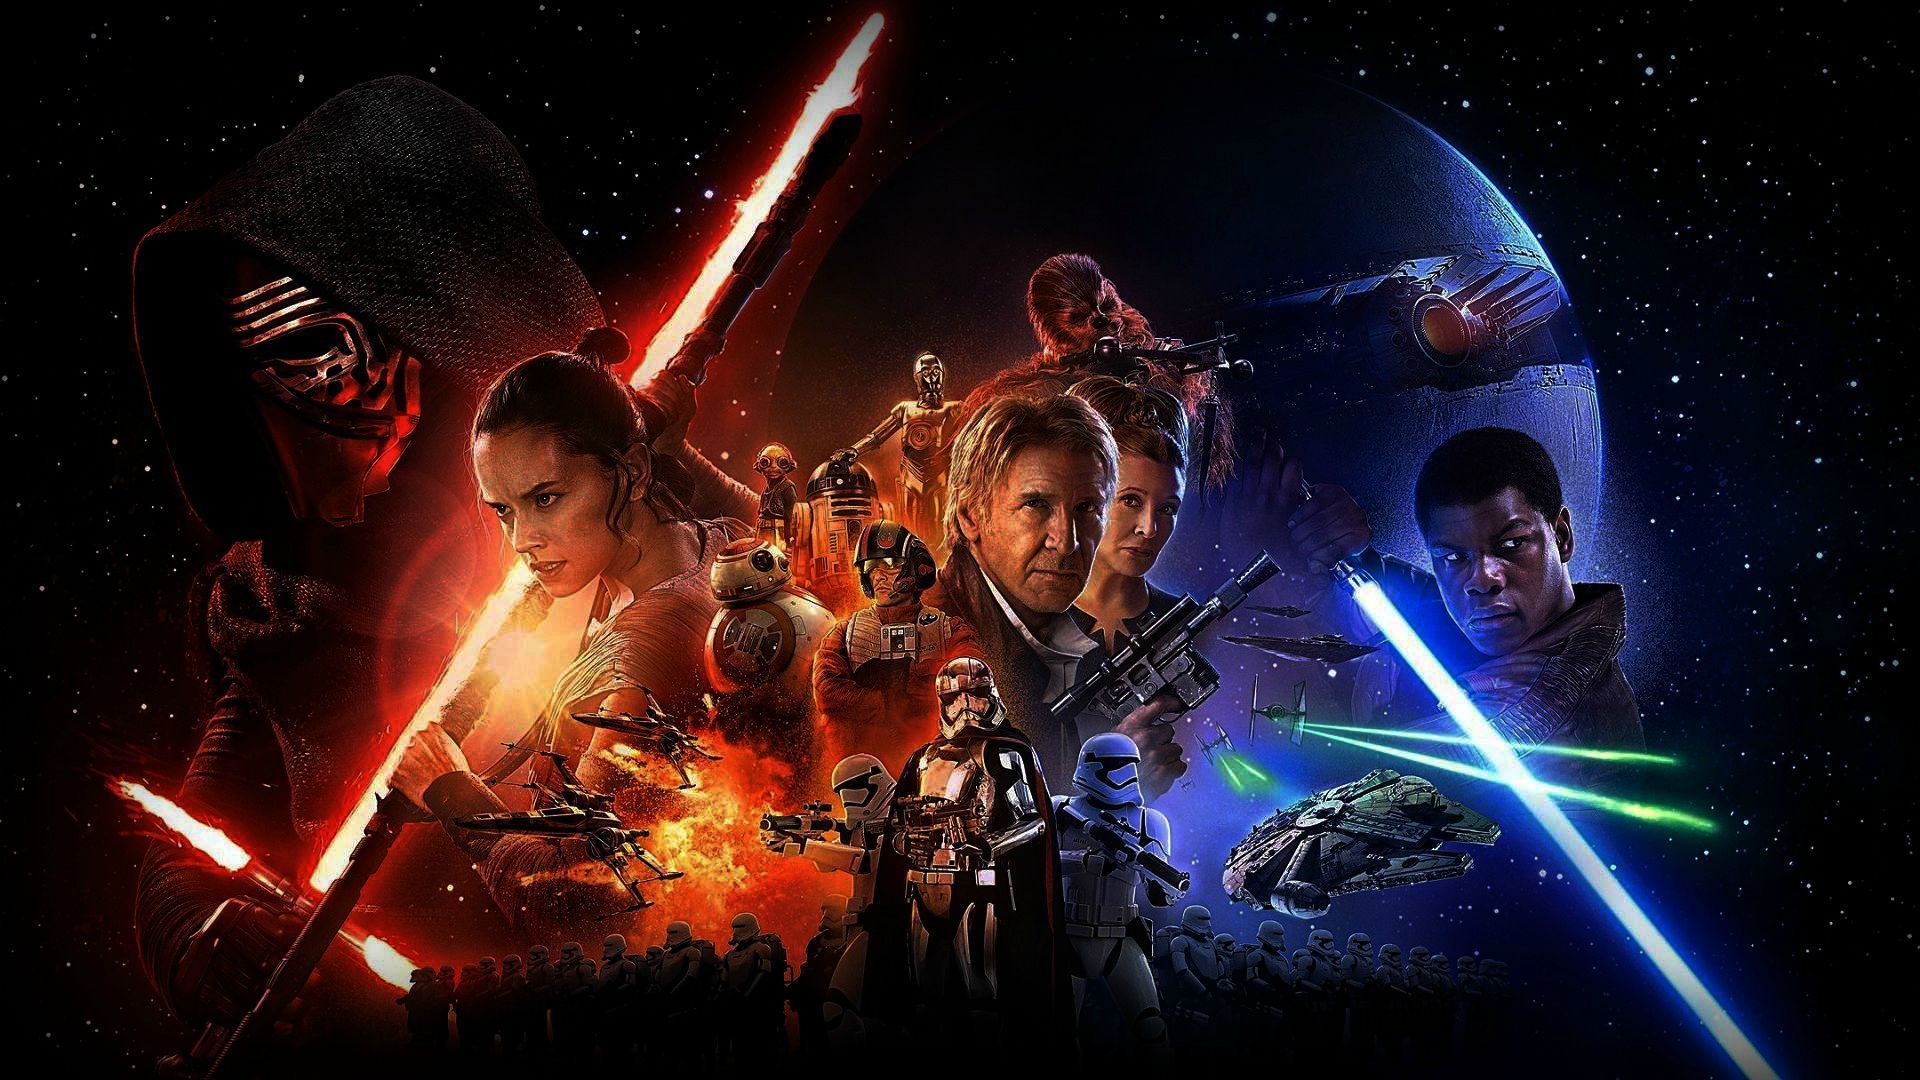 Wallpaper Weekends Bonus - Star Wars: The Force Awakens Wallpapers ...